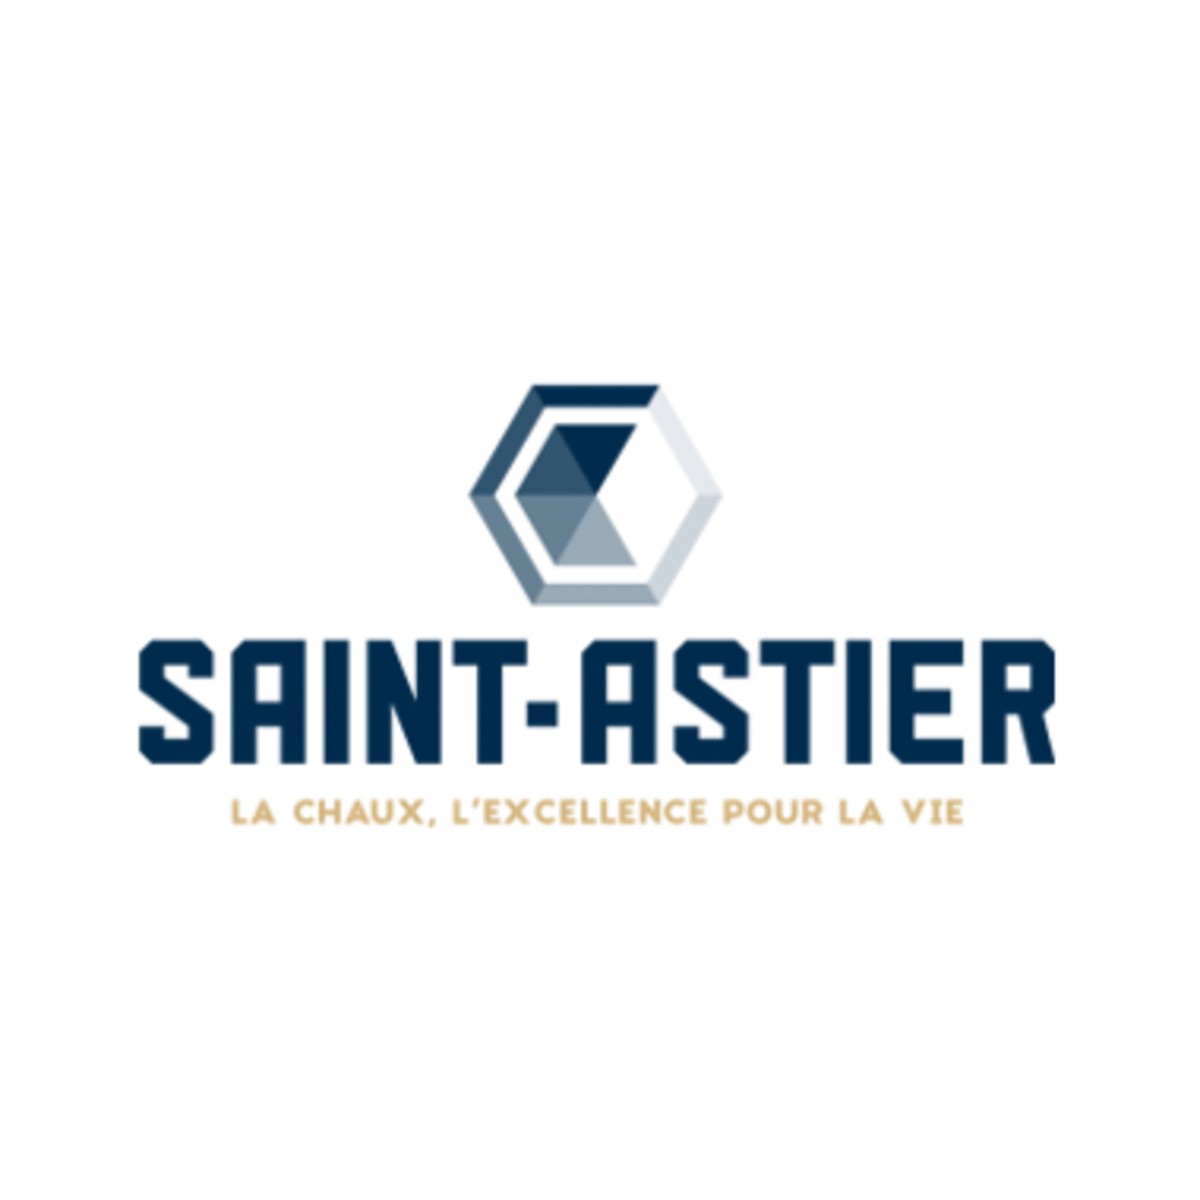 CESA Saint-Astier